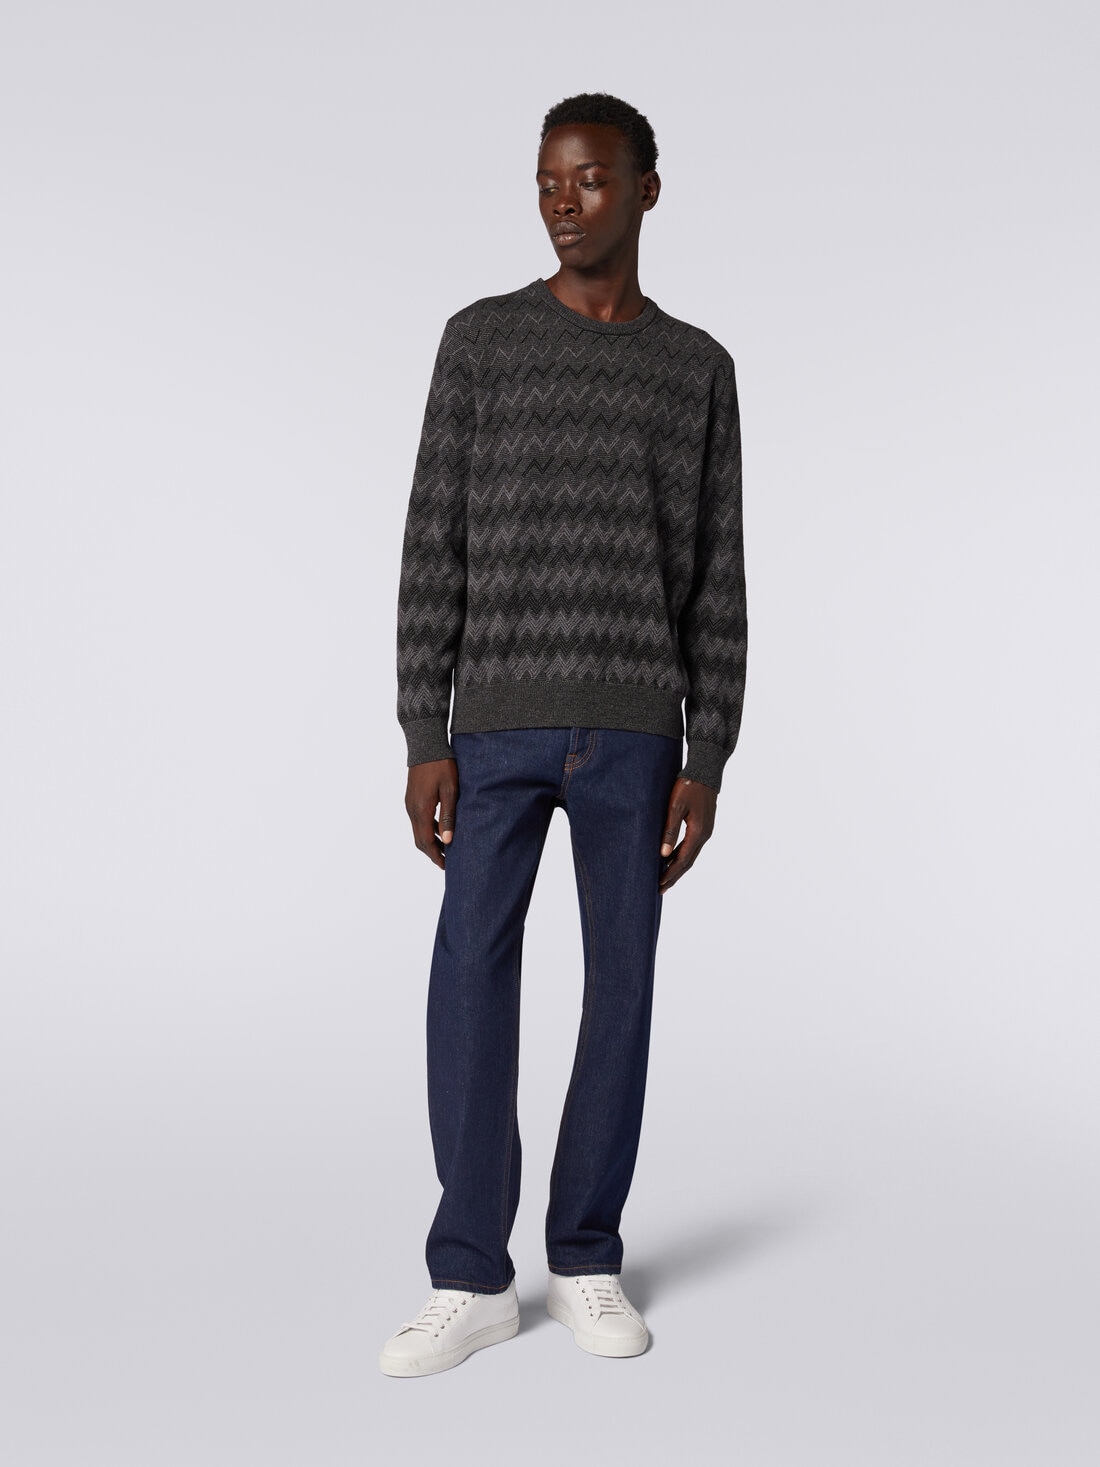 Cashmere crew-neck sweater with zigzags, Black & Grey - US23WN0VBK033KS91I1 - 1